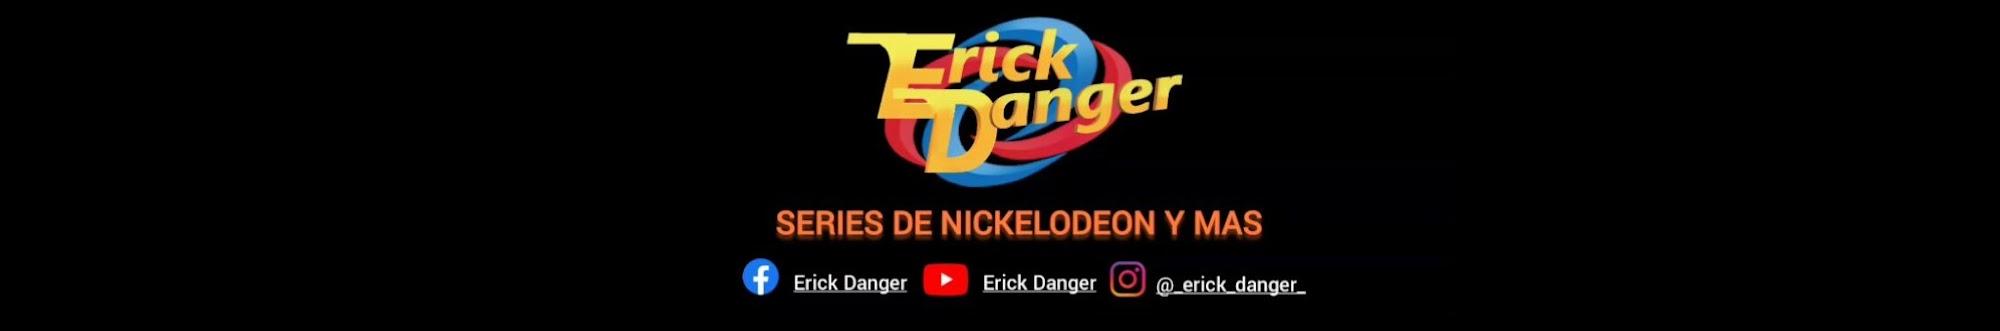 Erick Danger